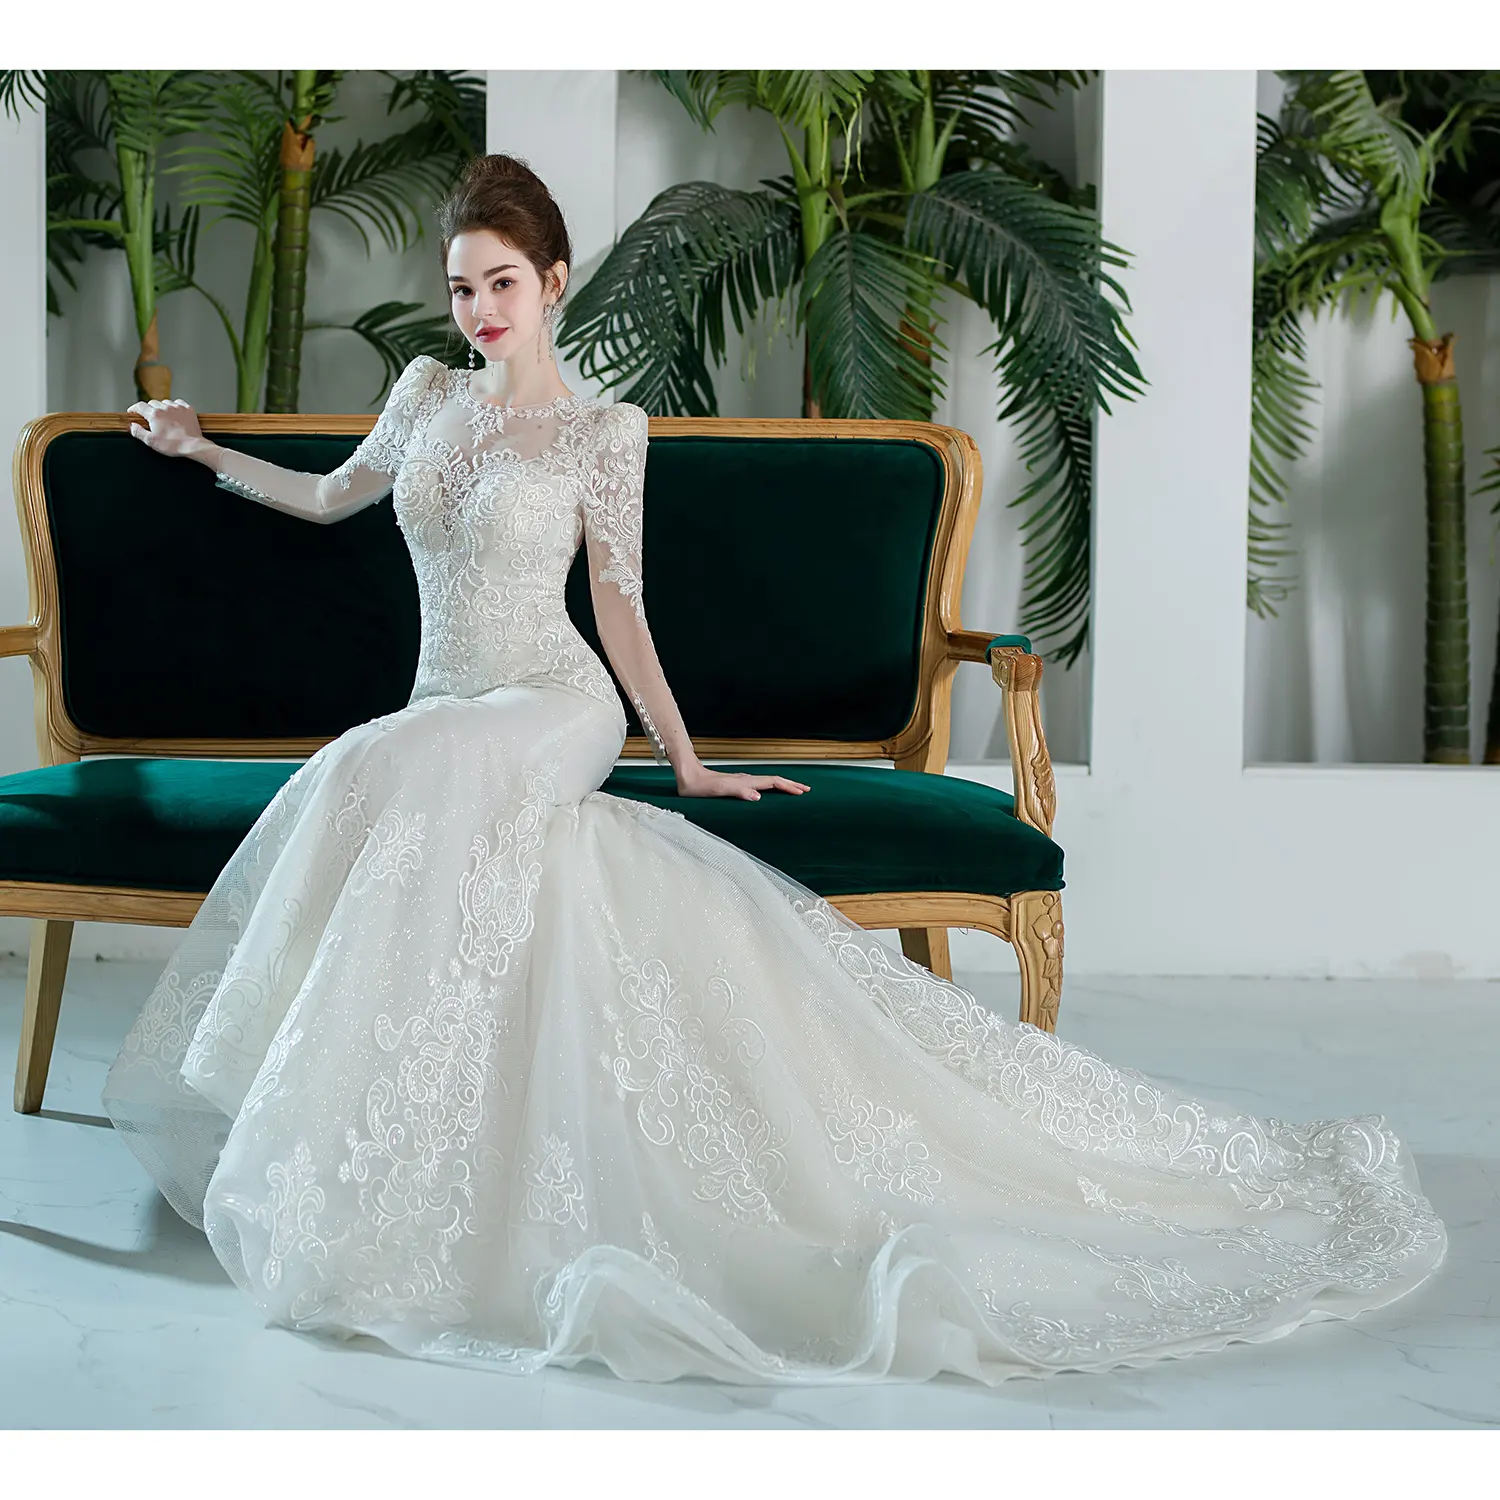 SL9190 hot sale vintage mermaid wedding dress for girls robe doiree illusion long sleeves simple beading elegant bridal gown